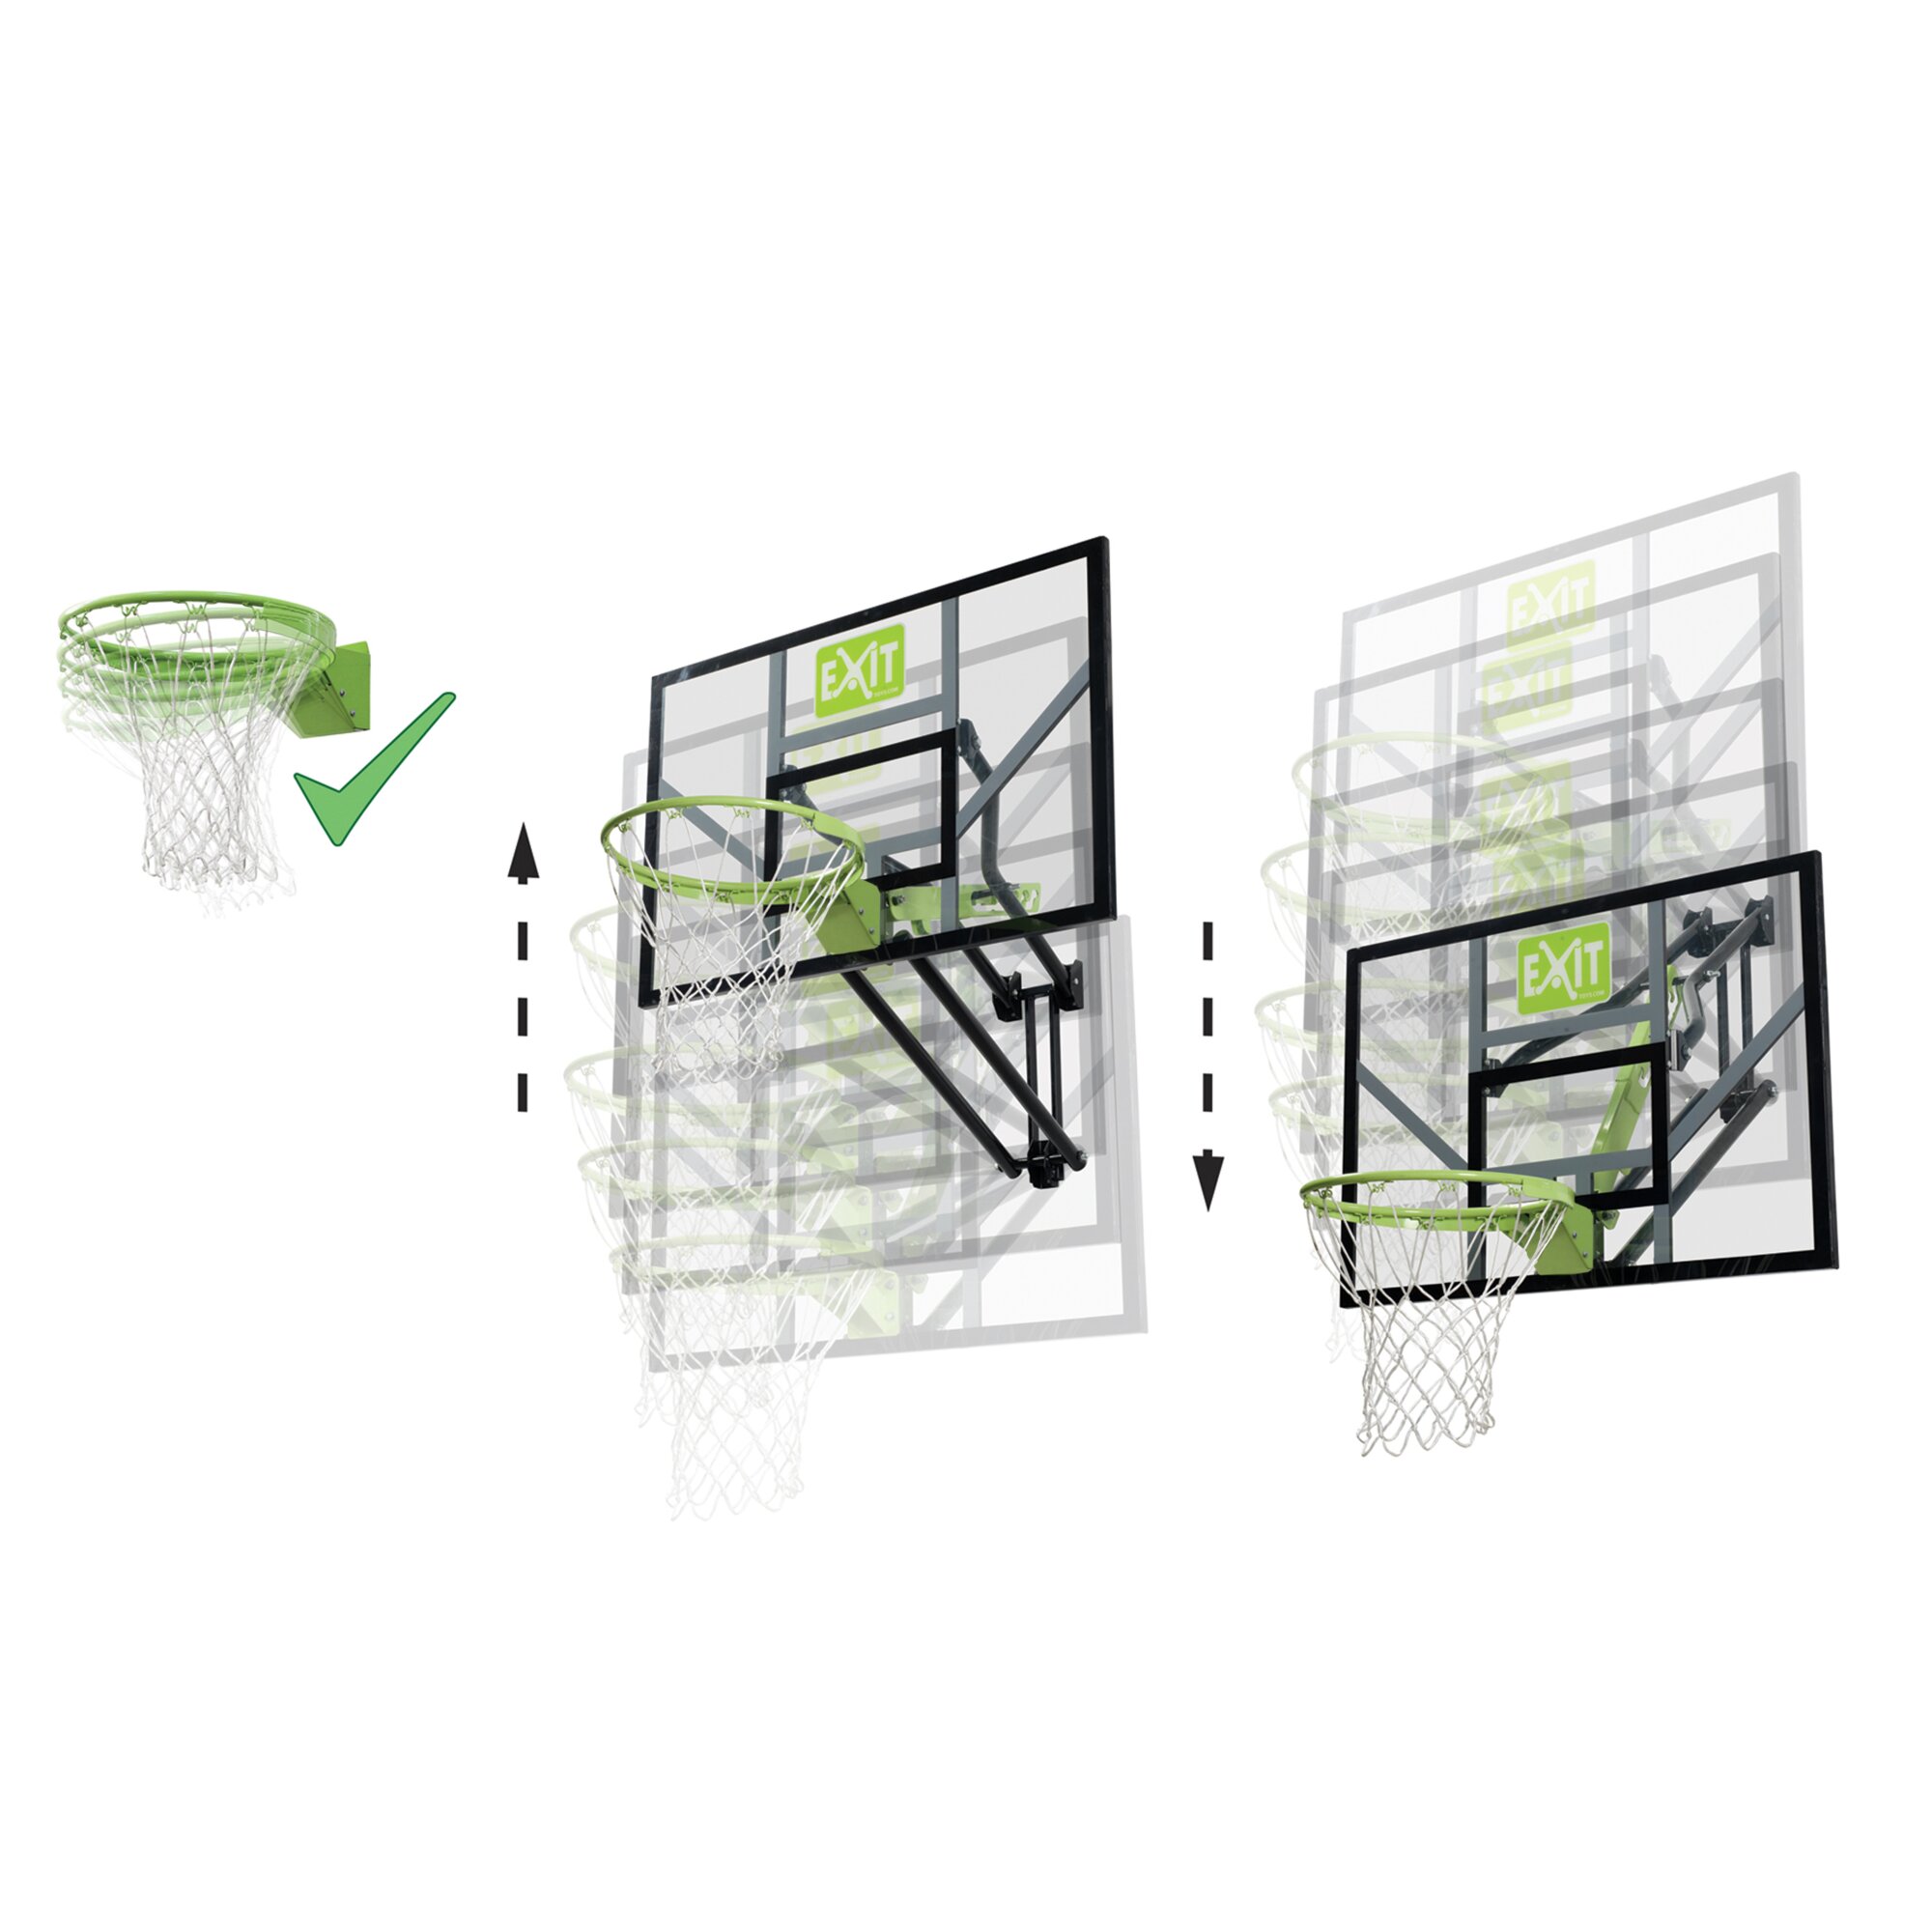 EXIT Galaxy Basketballkorb Wandmontage inkl. Dunkring grün/schwarz 5 Stufen